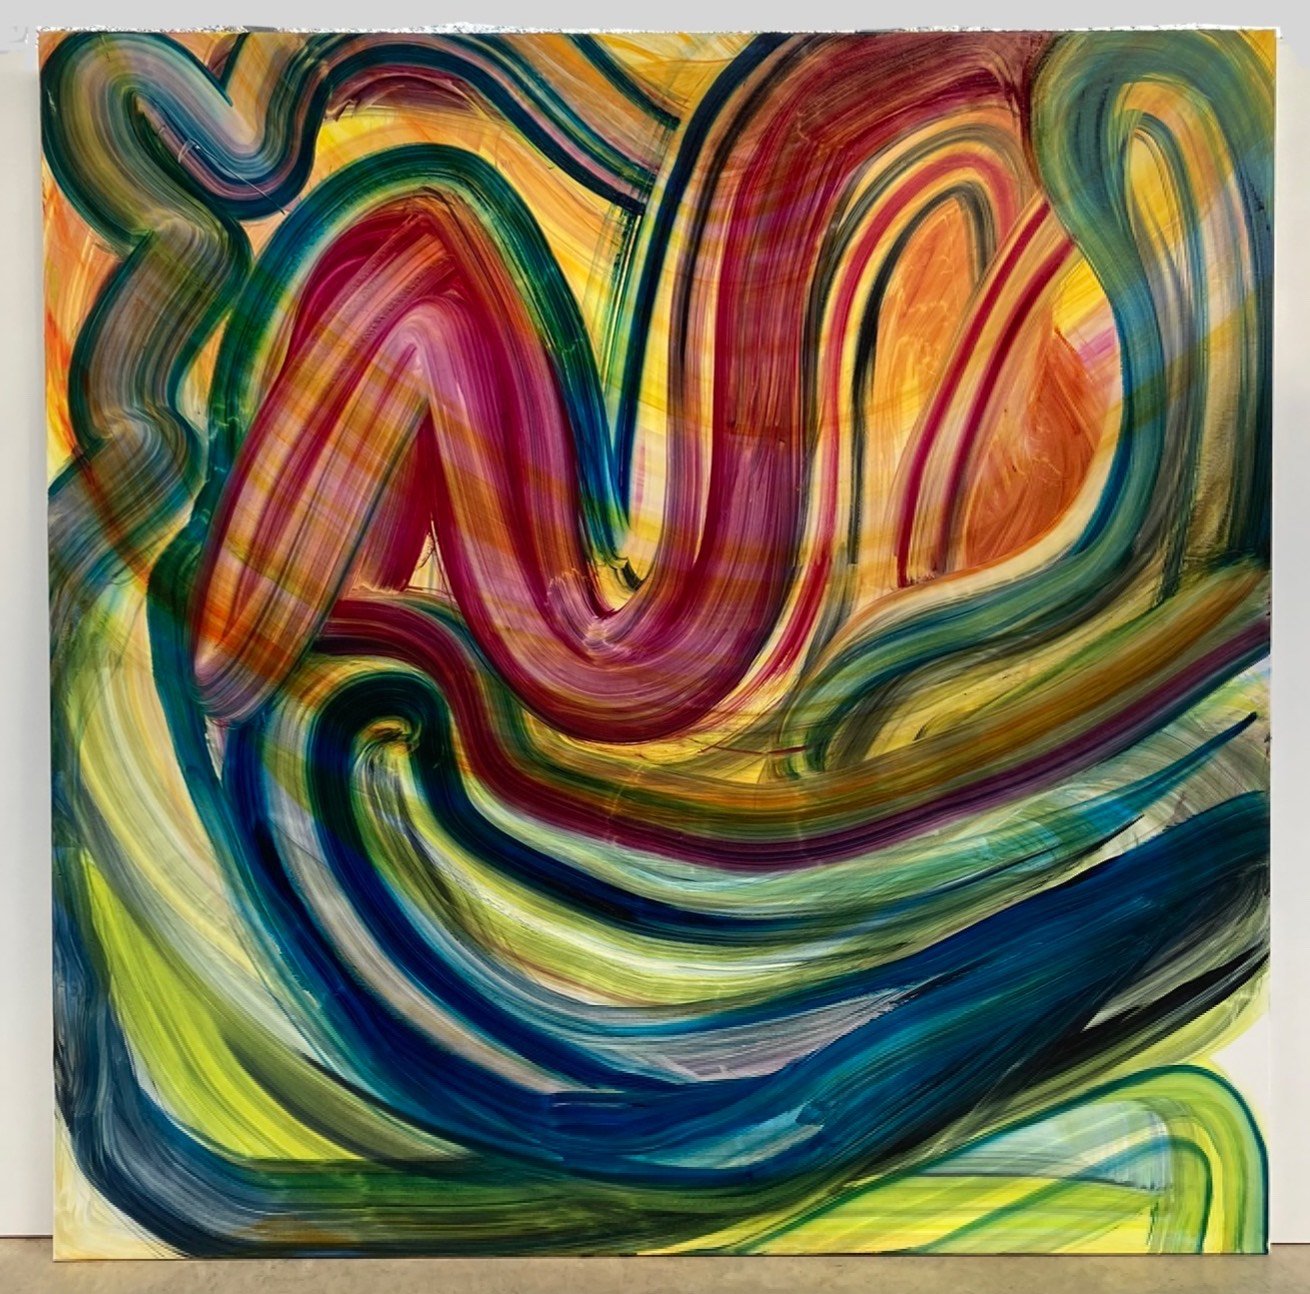  72x72” (183x183cm) oil on canvas, 2022 